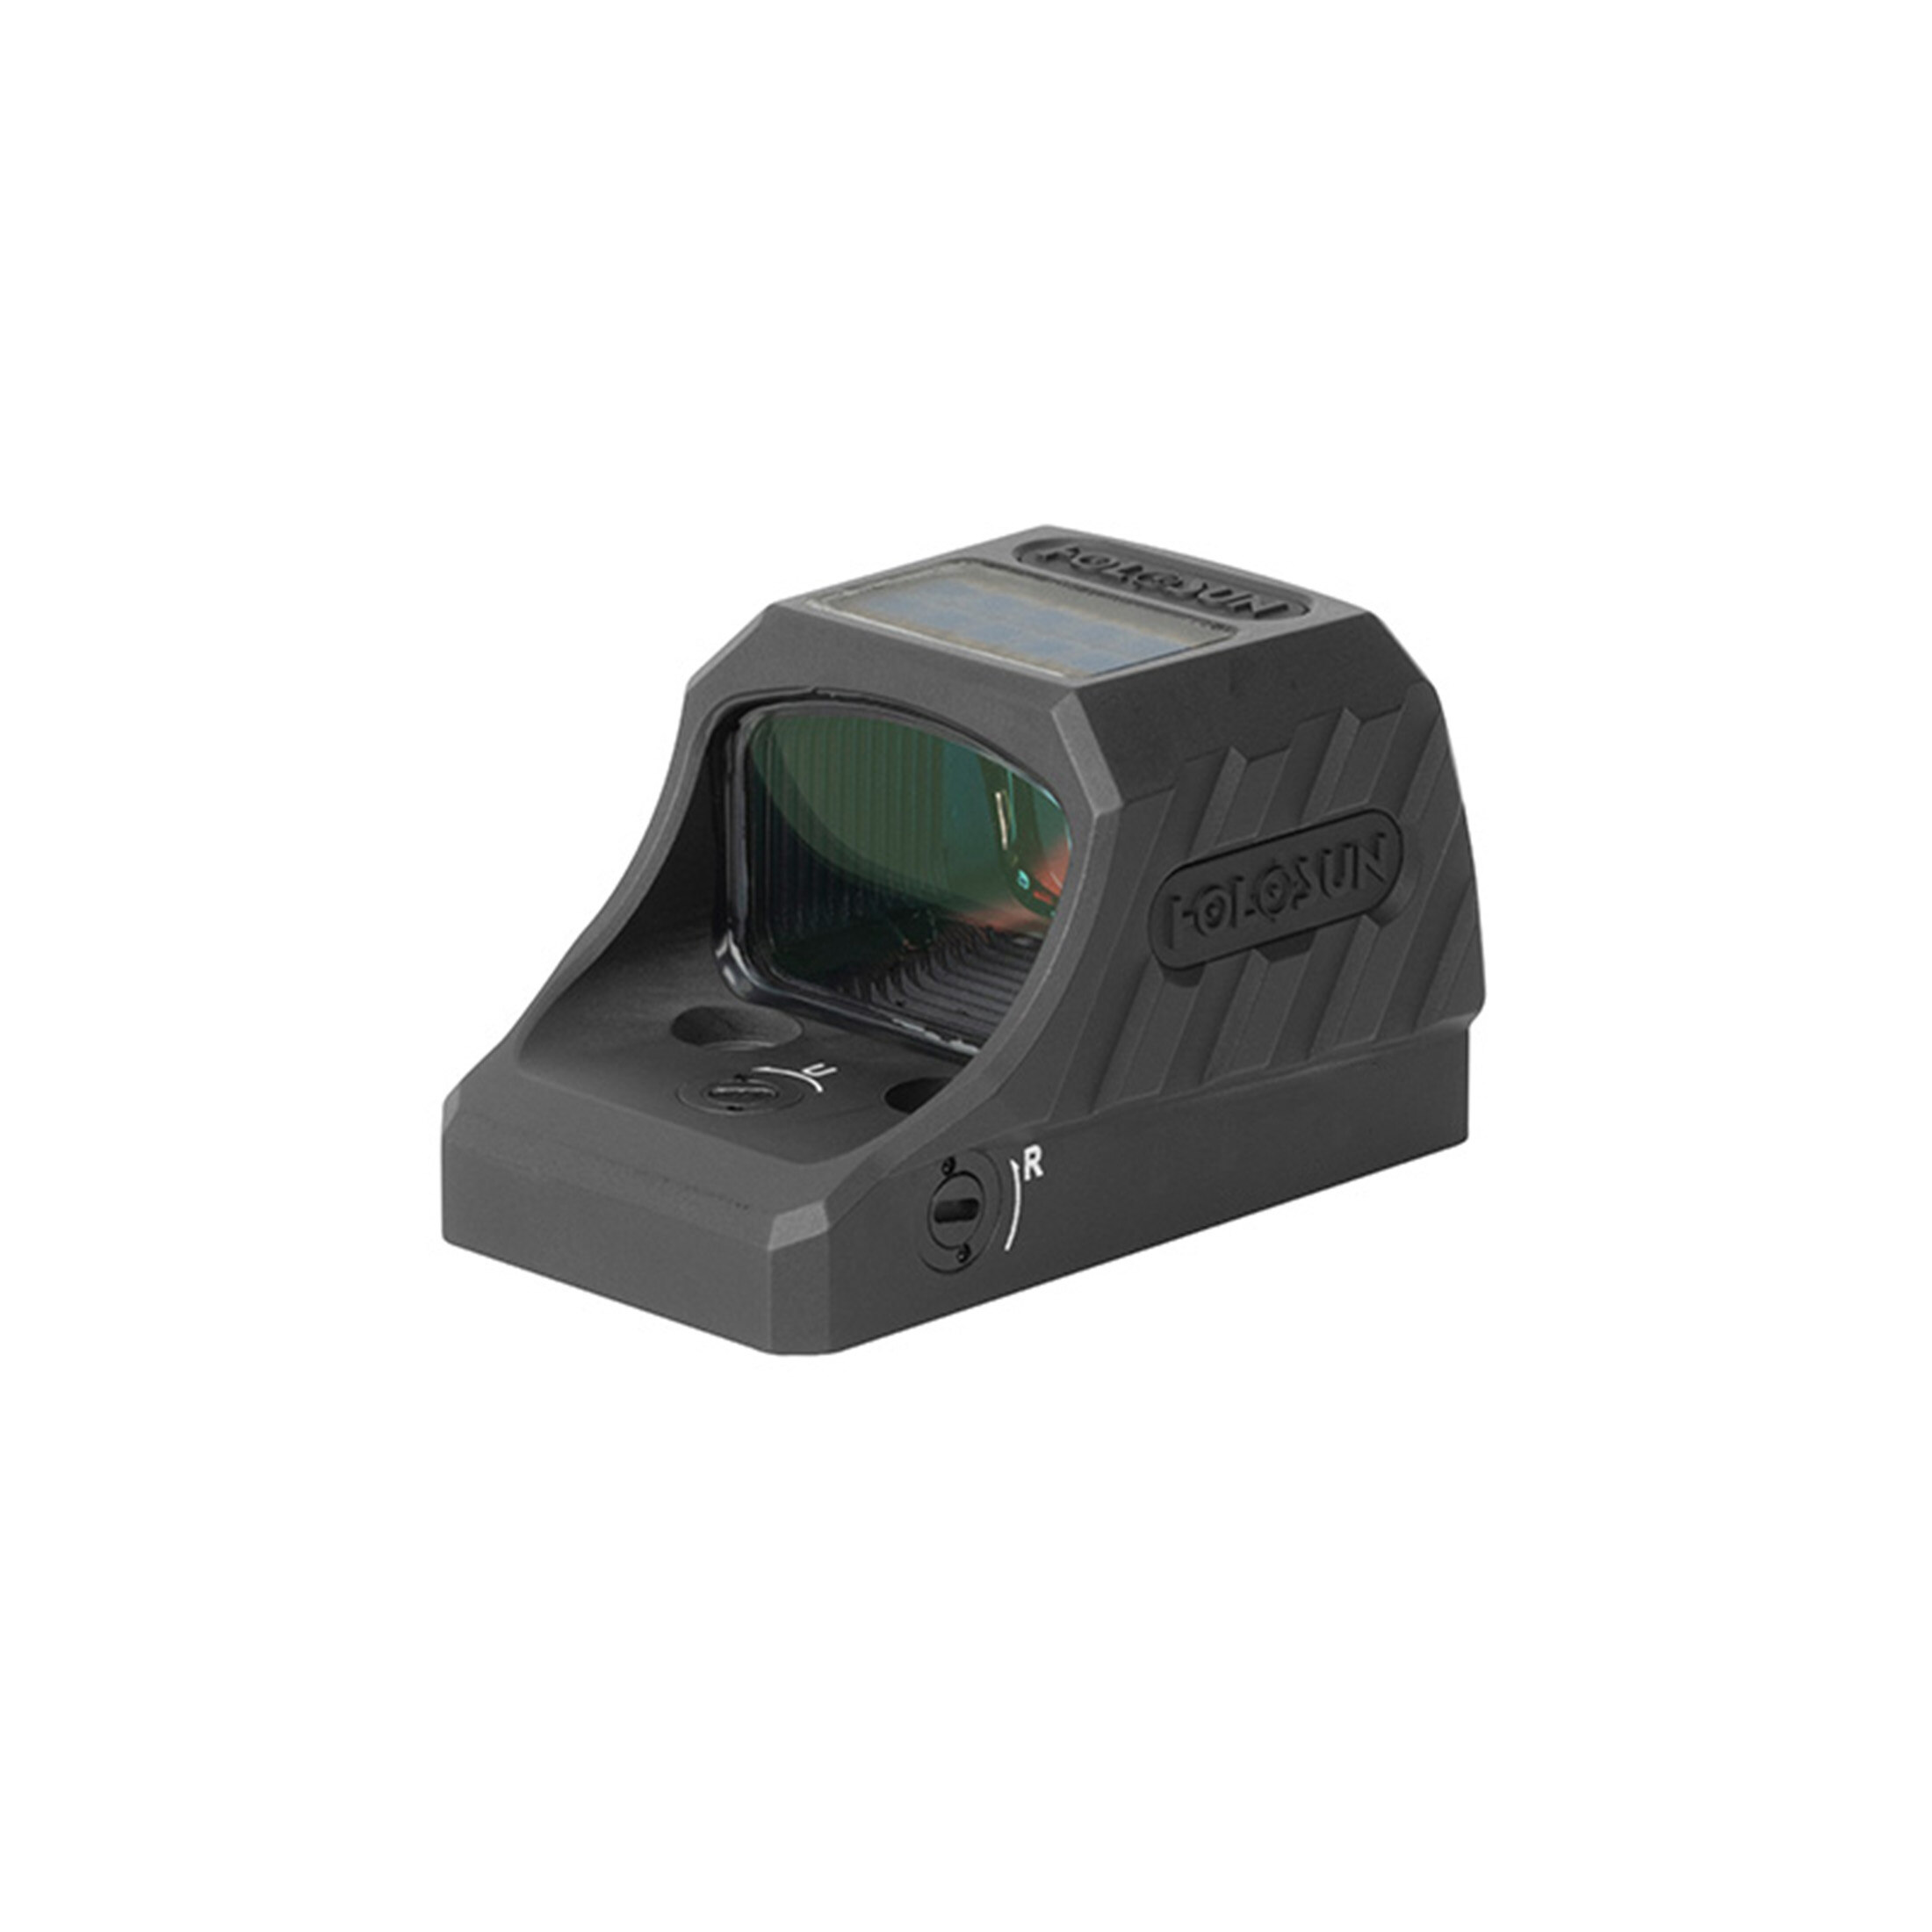 Holosun SCS-320-GR enclosed reflex green dot sight switchable 2MOA dot, 32MOA circle dot reticle so…